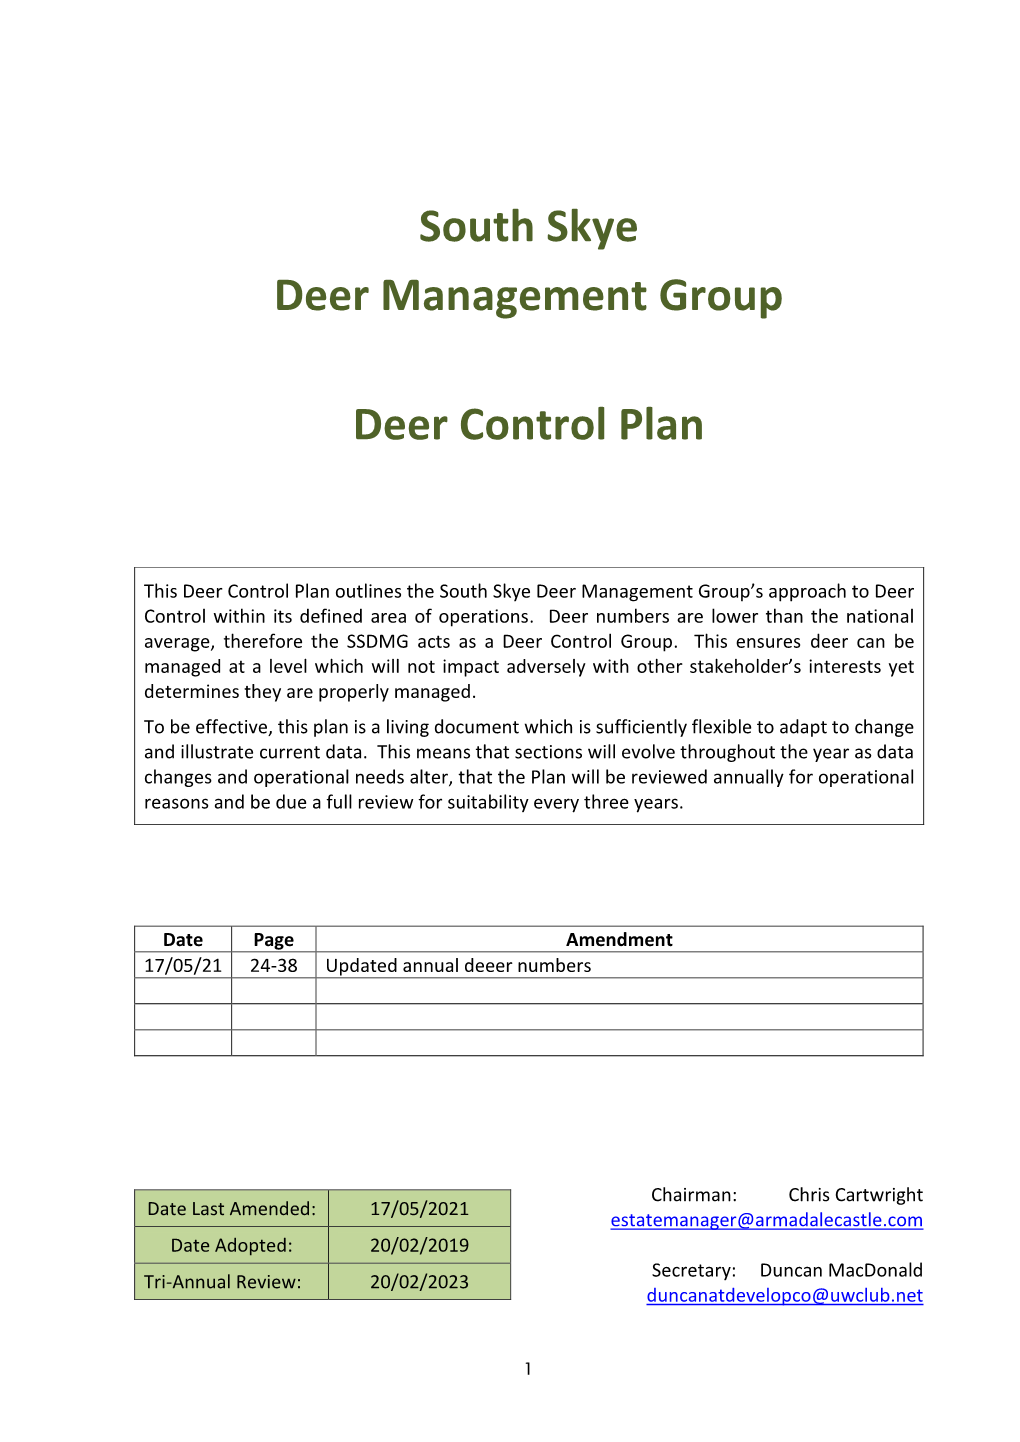 South Skye Deer Management Group Deer Control Plan